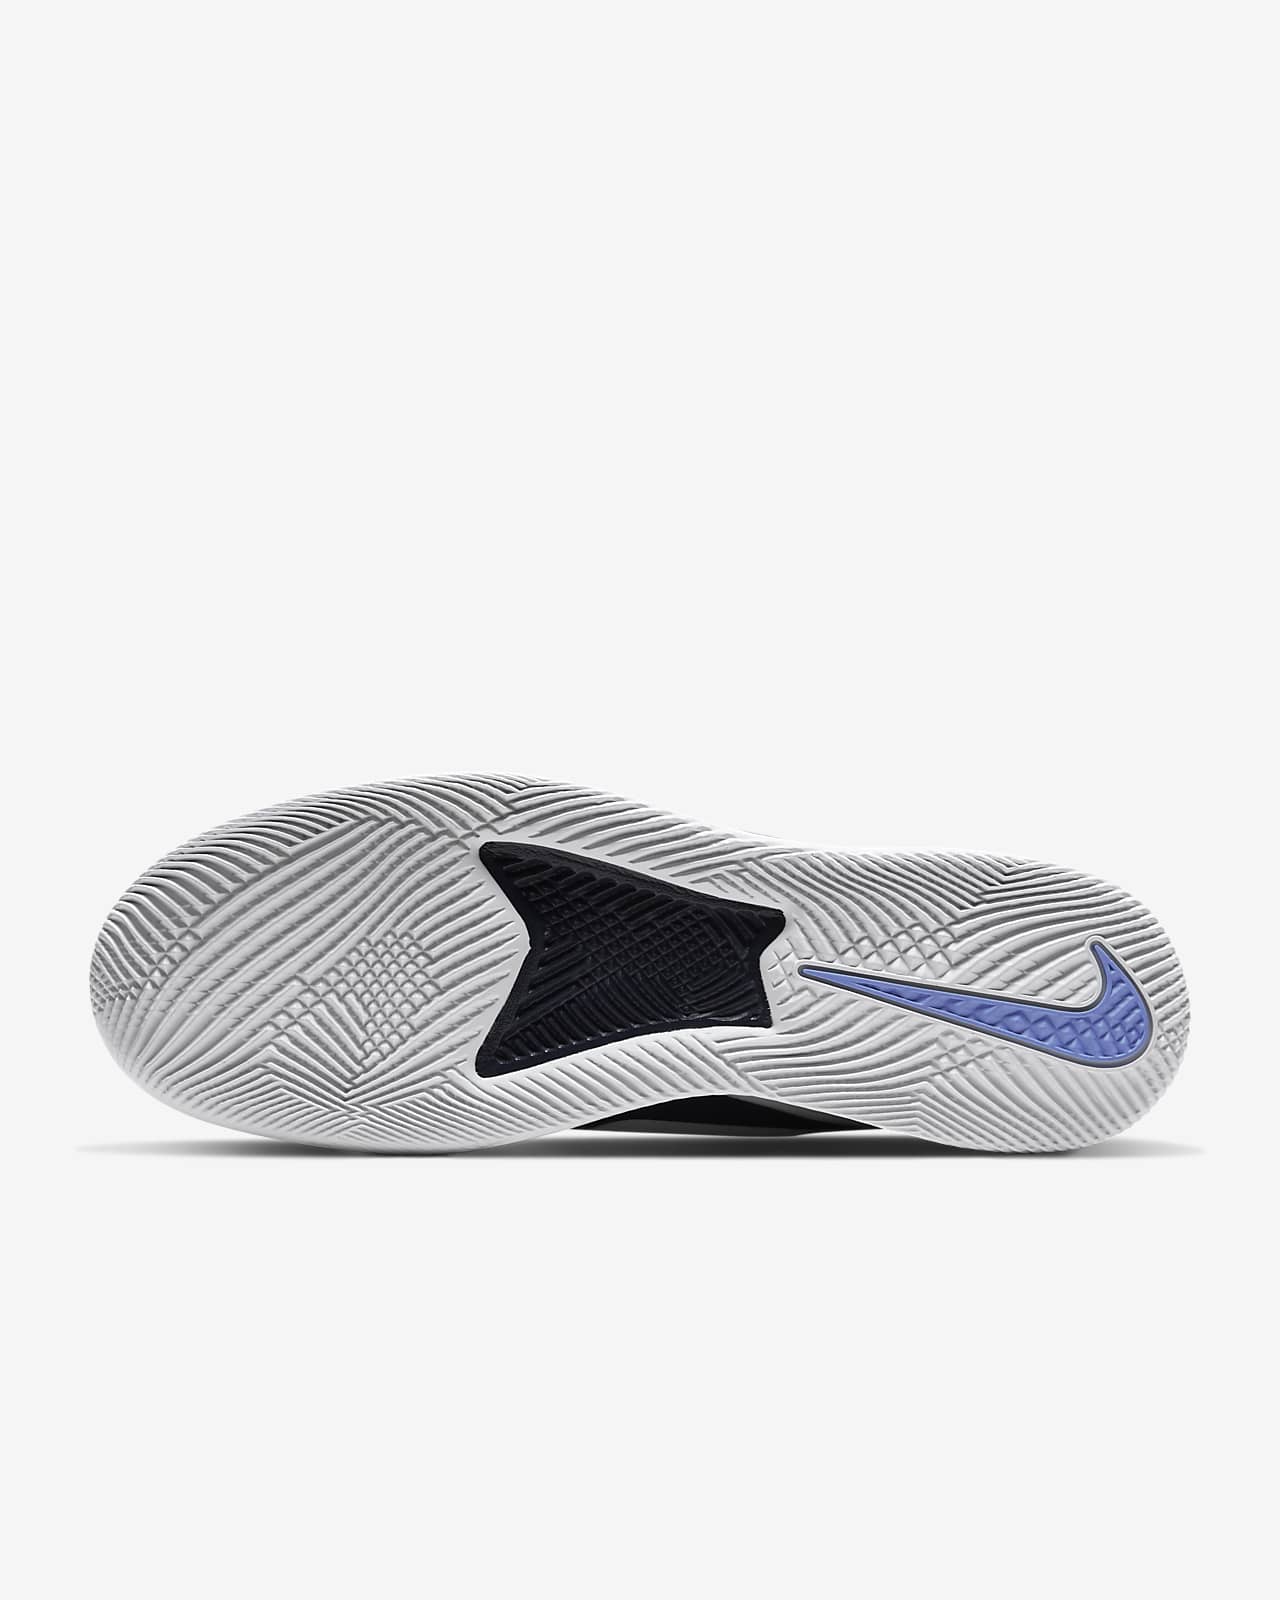 NikeCourt Air Max Vapor Wing MS Men's Multi-Surface Tennis Shoe